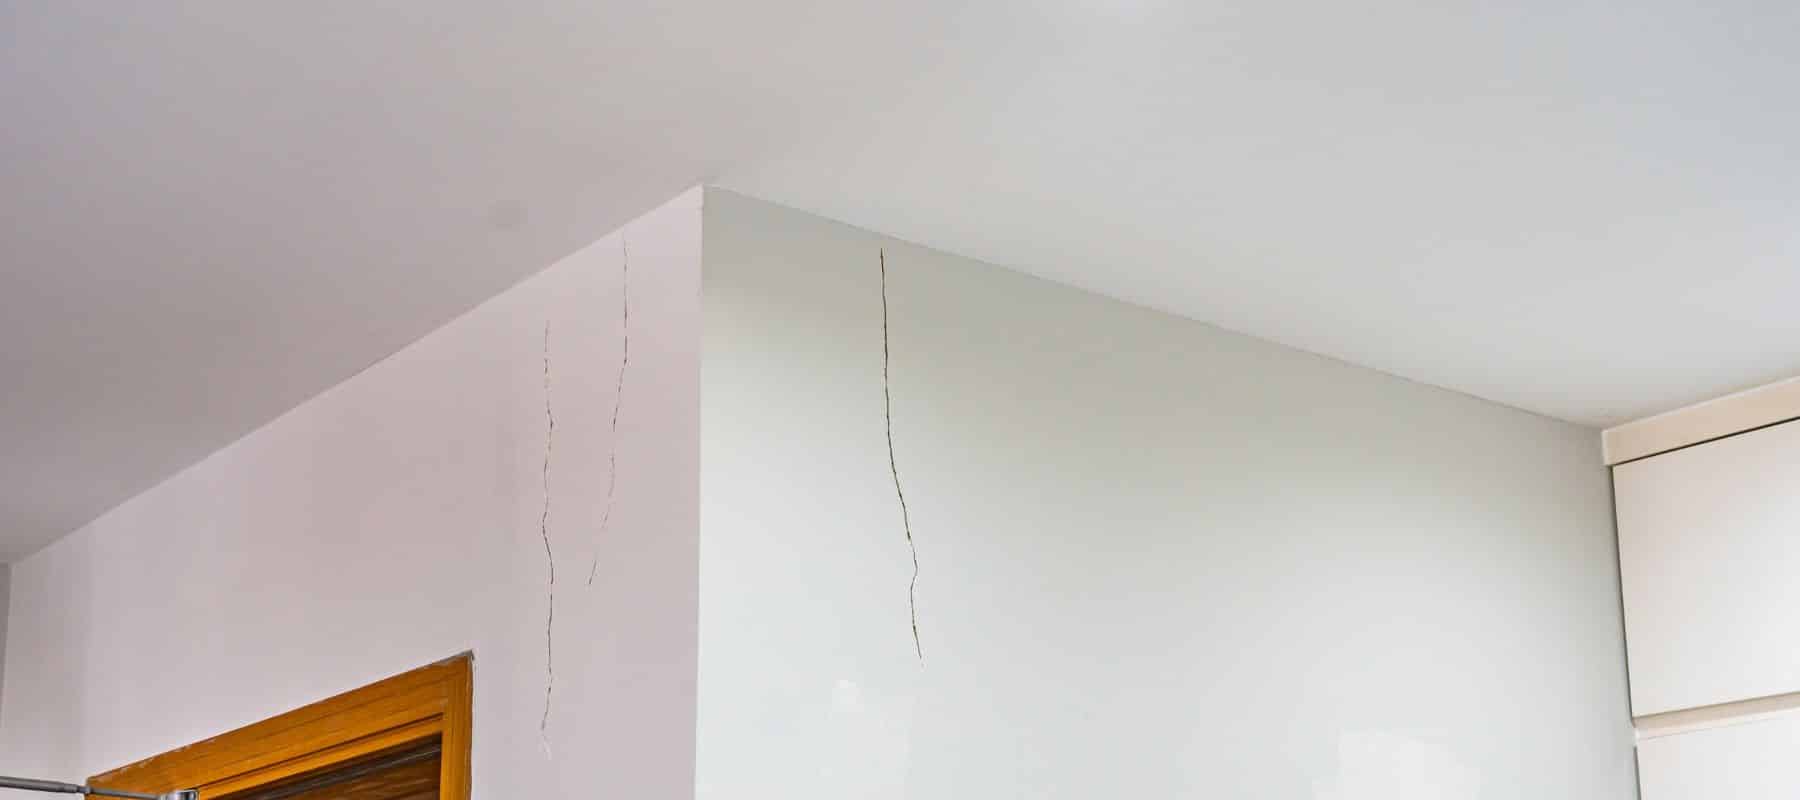 cracking walls due to foundation damage